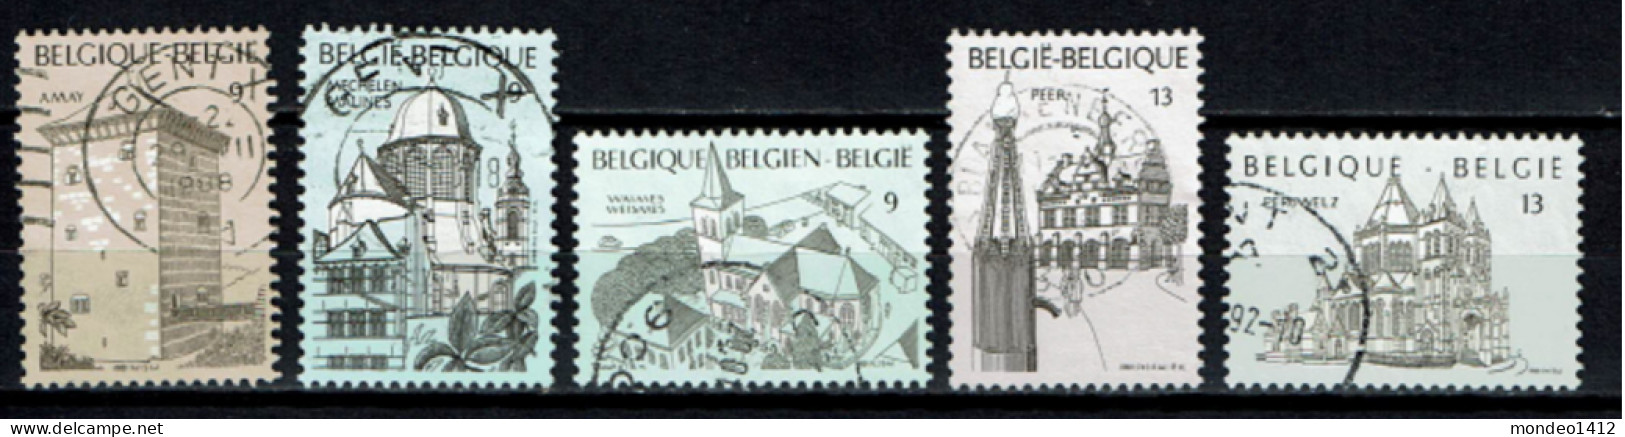 België 1988 OBP 2288/2292 - Y&T 2288/92 Toerisme, Amay, Mechelen, Waimes, Peer, Péruwelz - Gebruikt